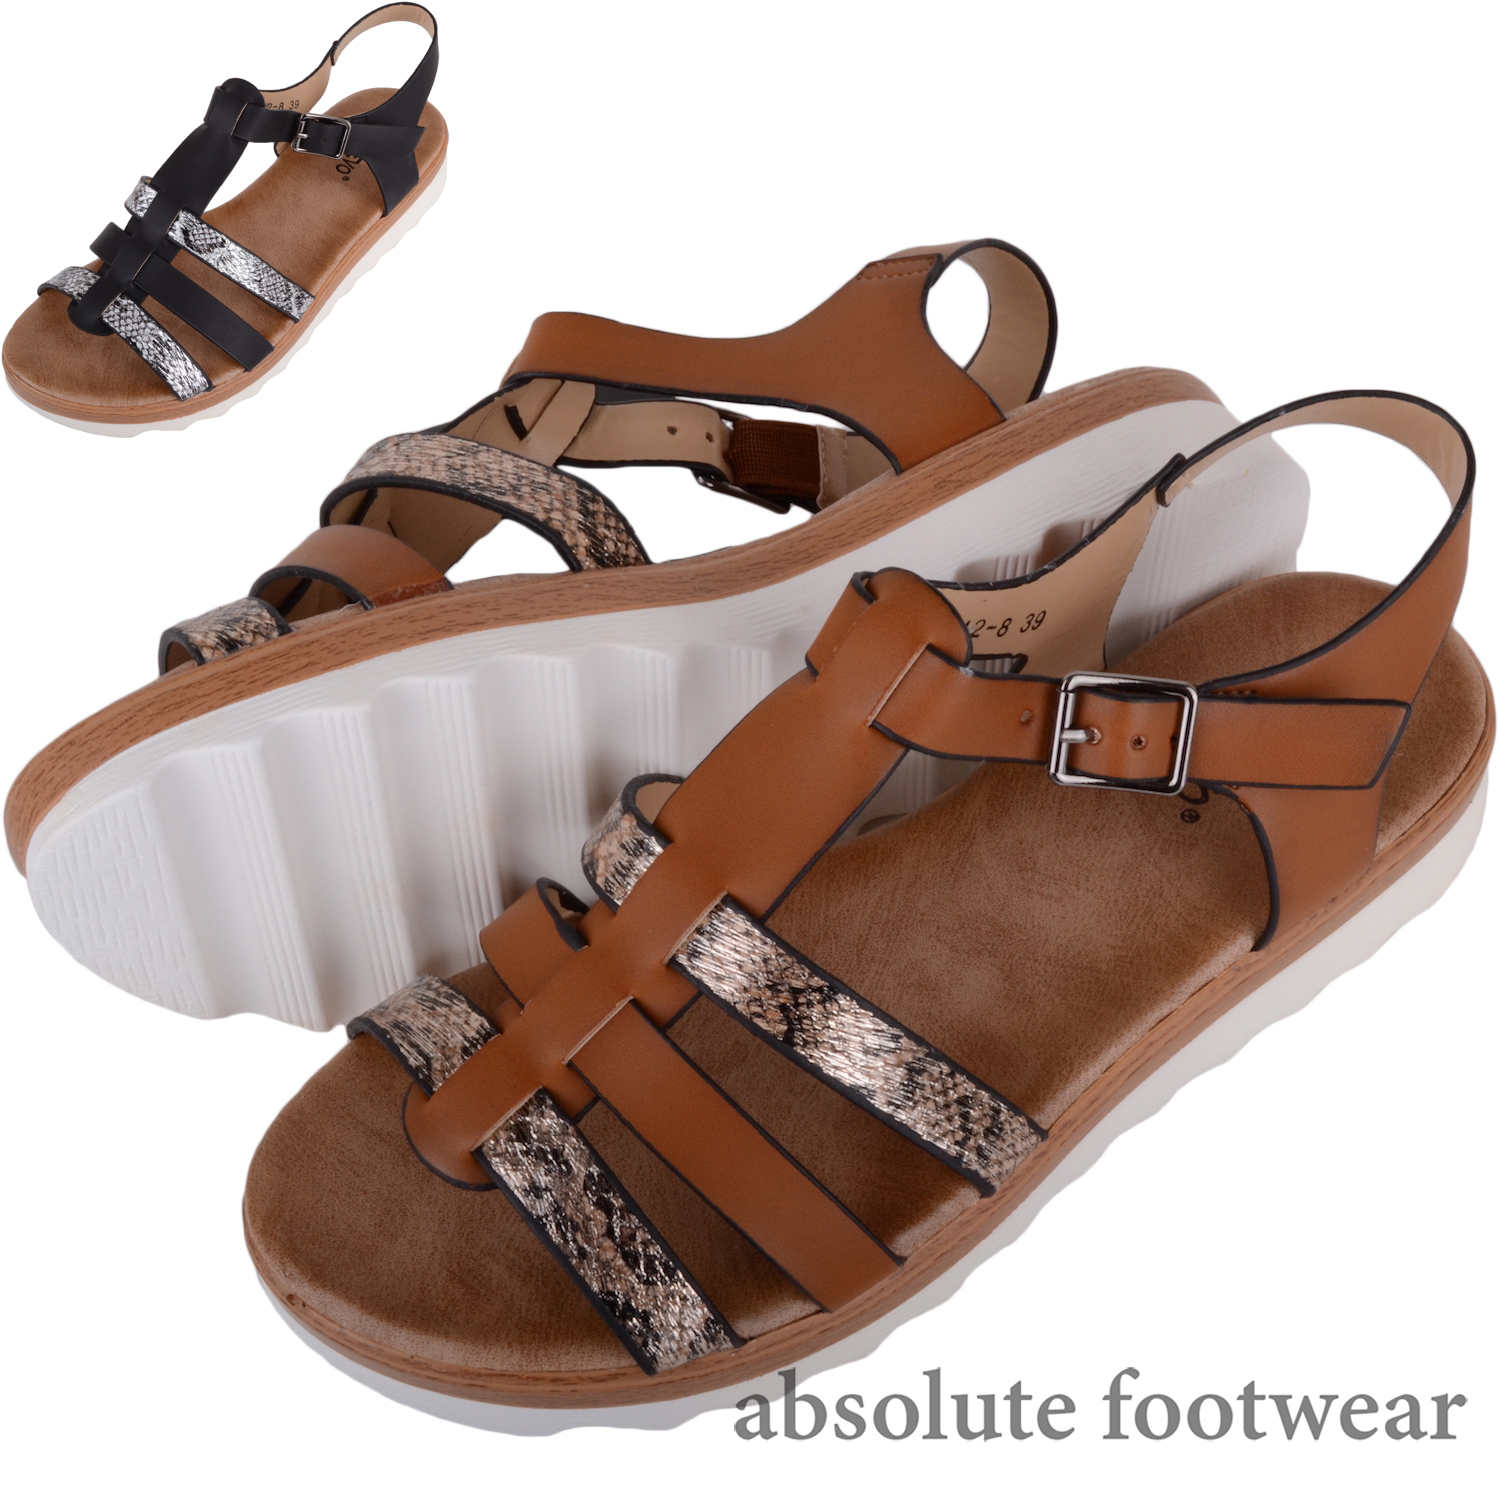 gladiator style sandals